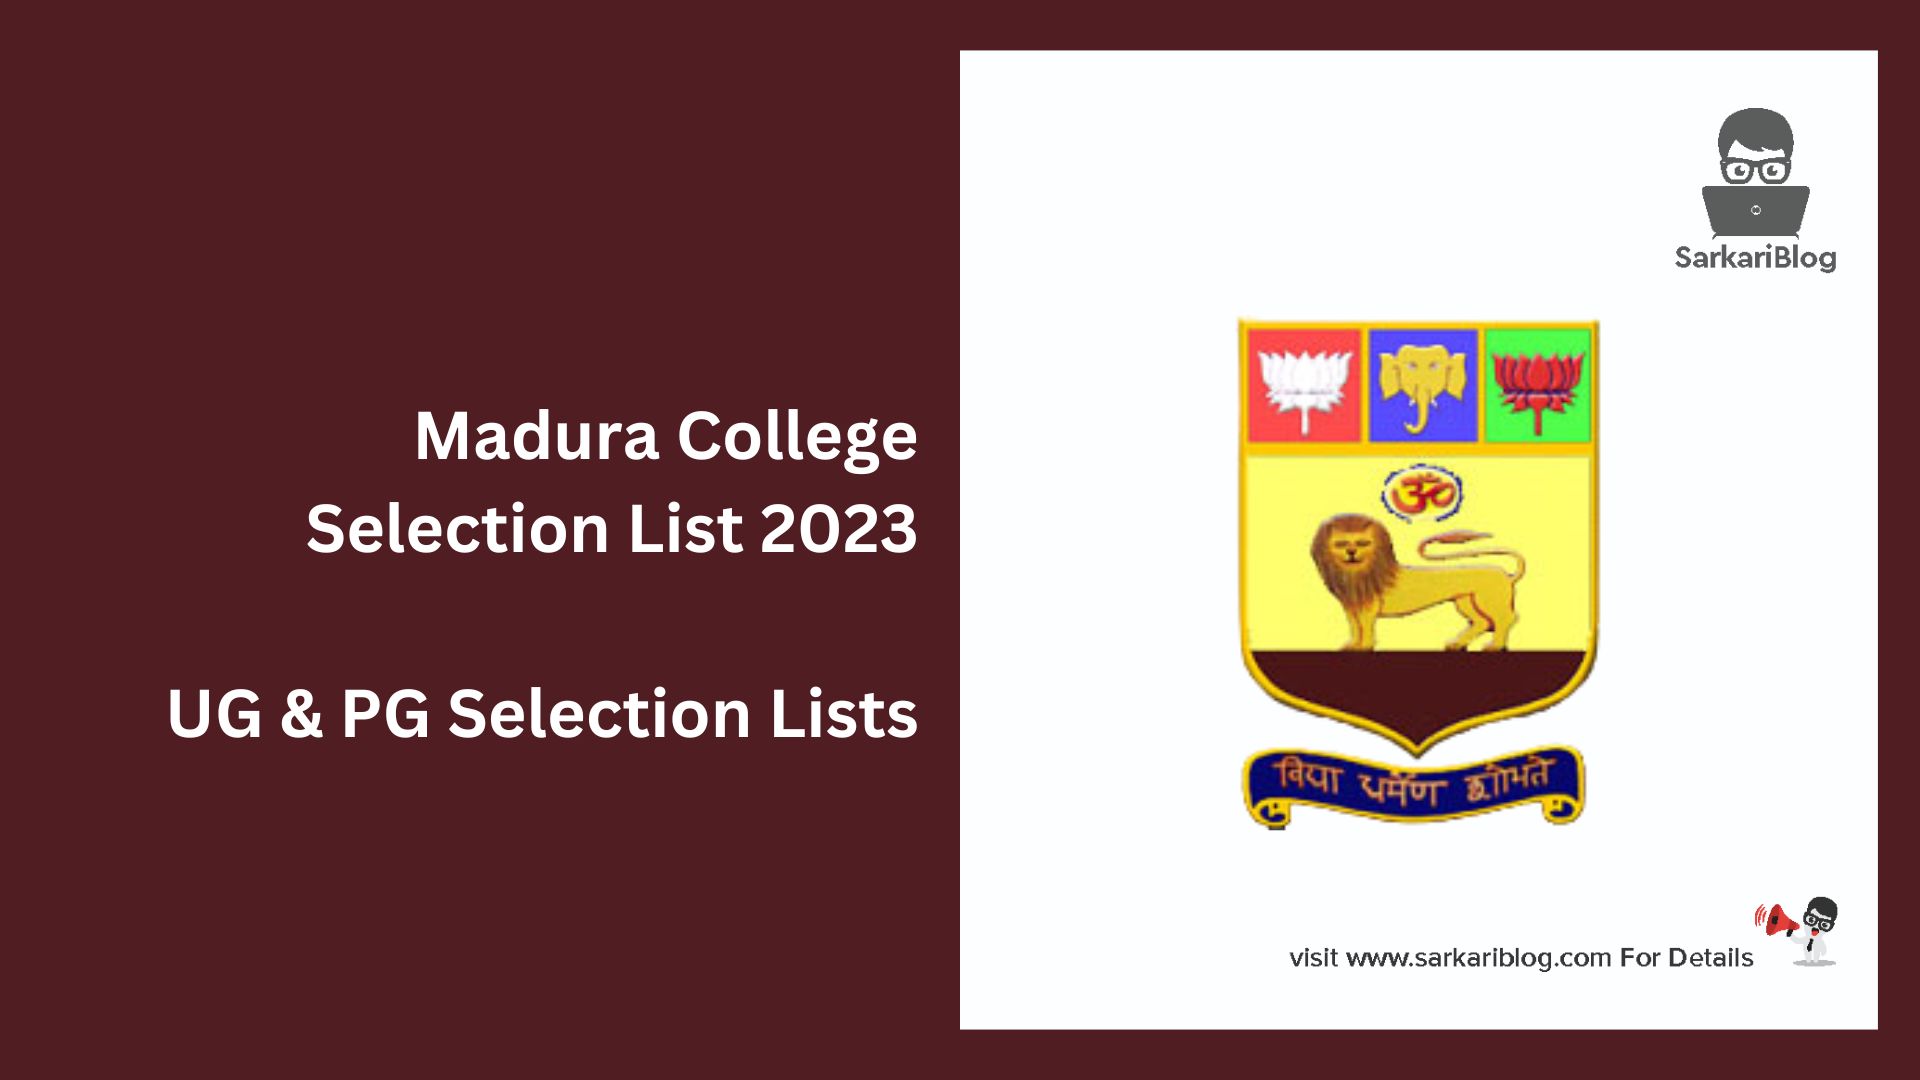 Madura College Selection List 2023